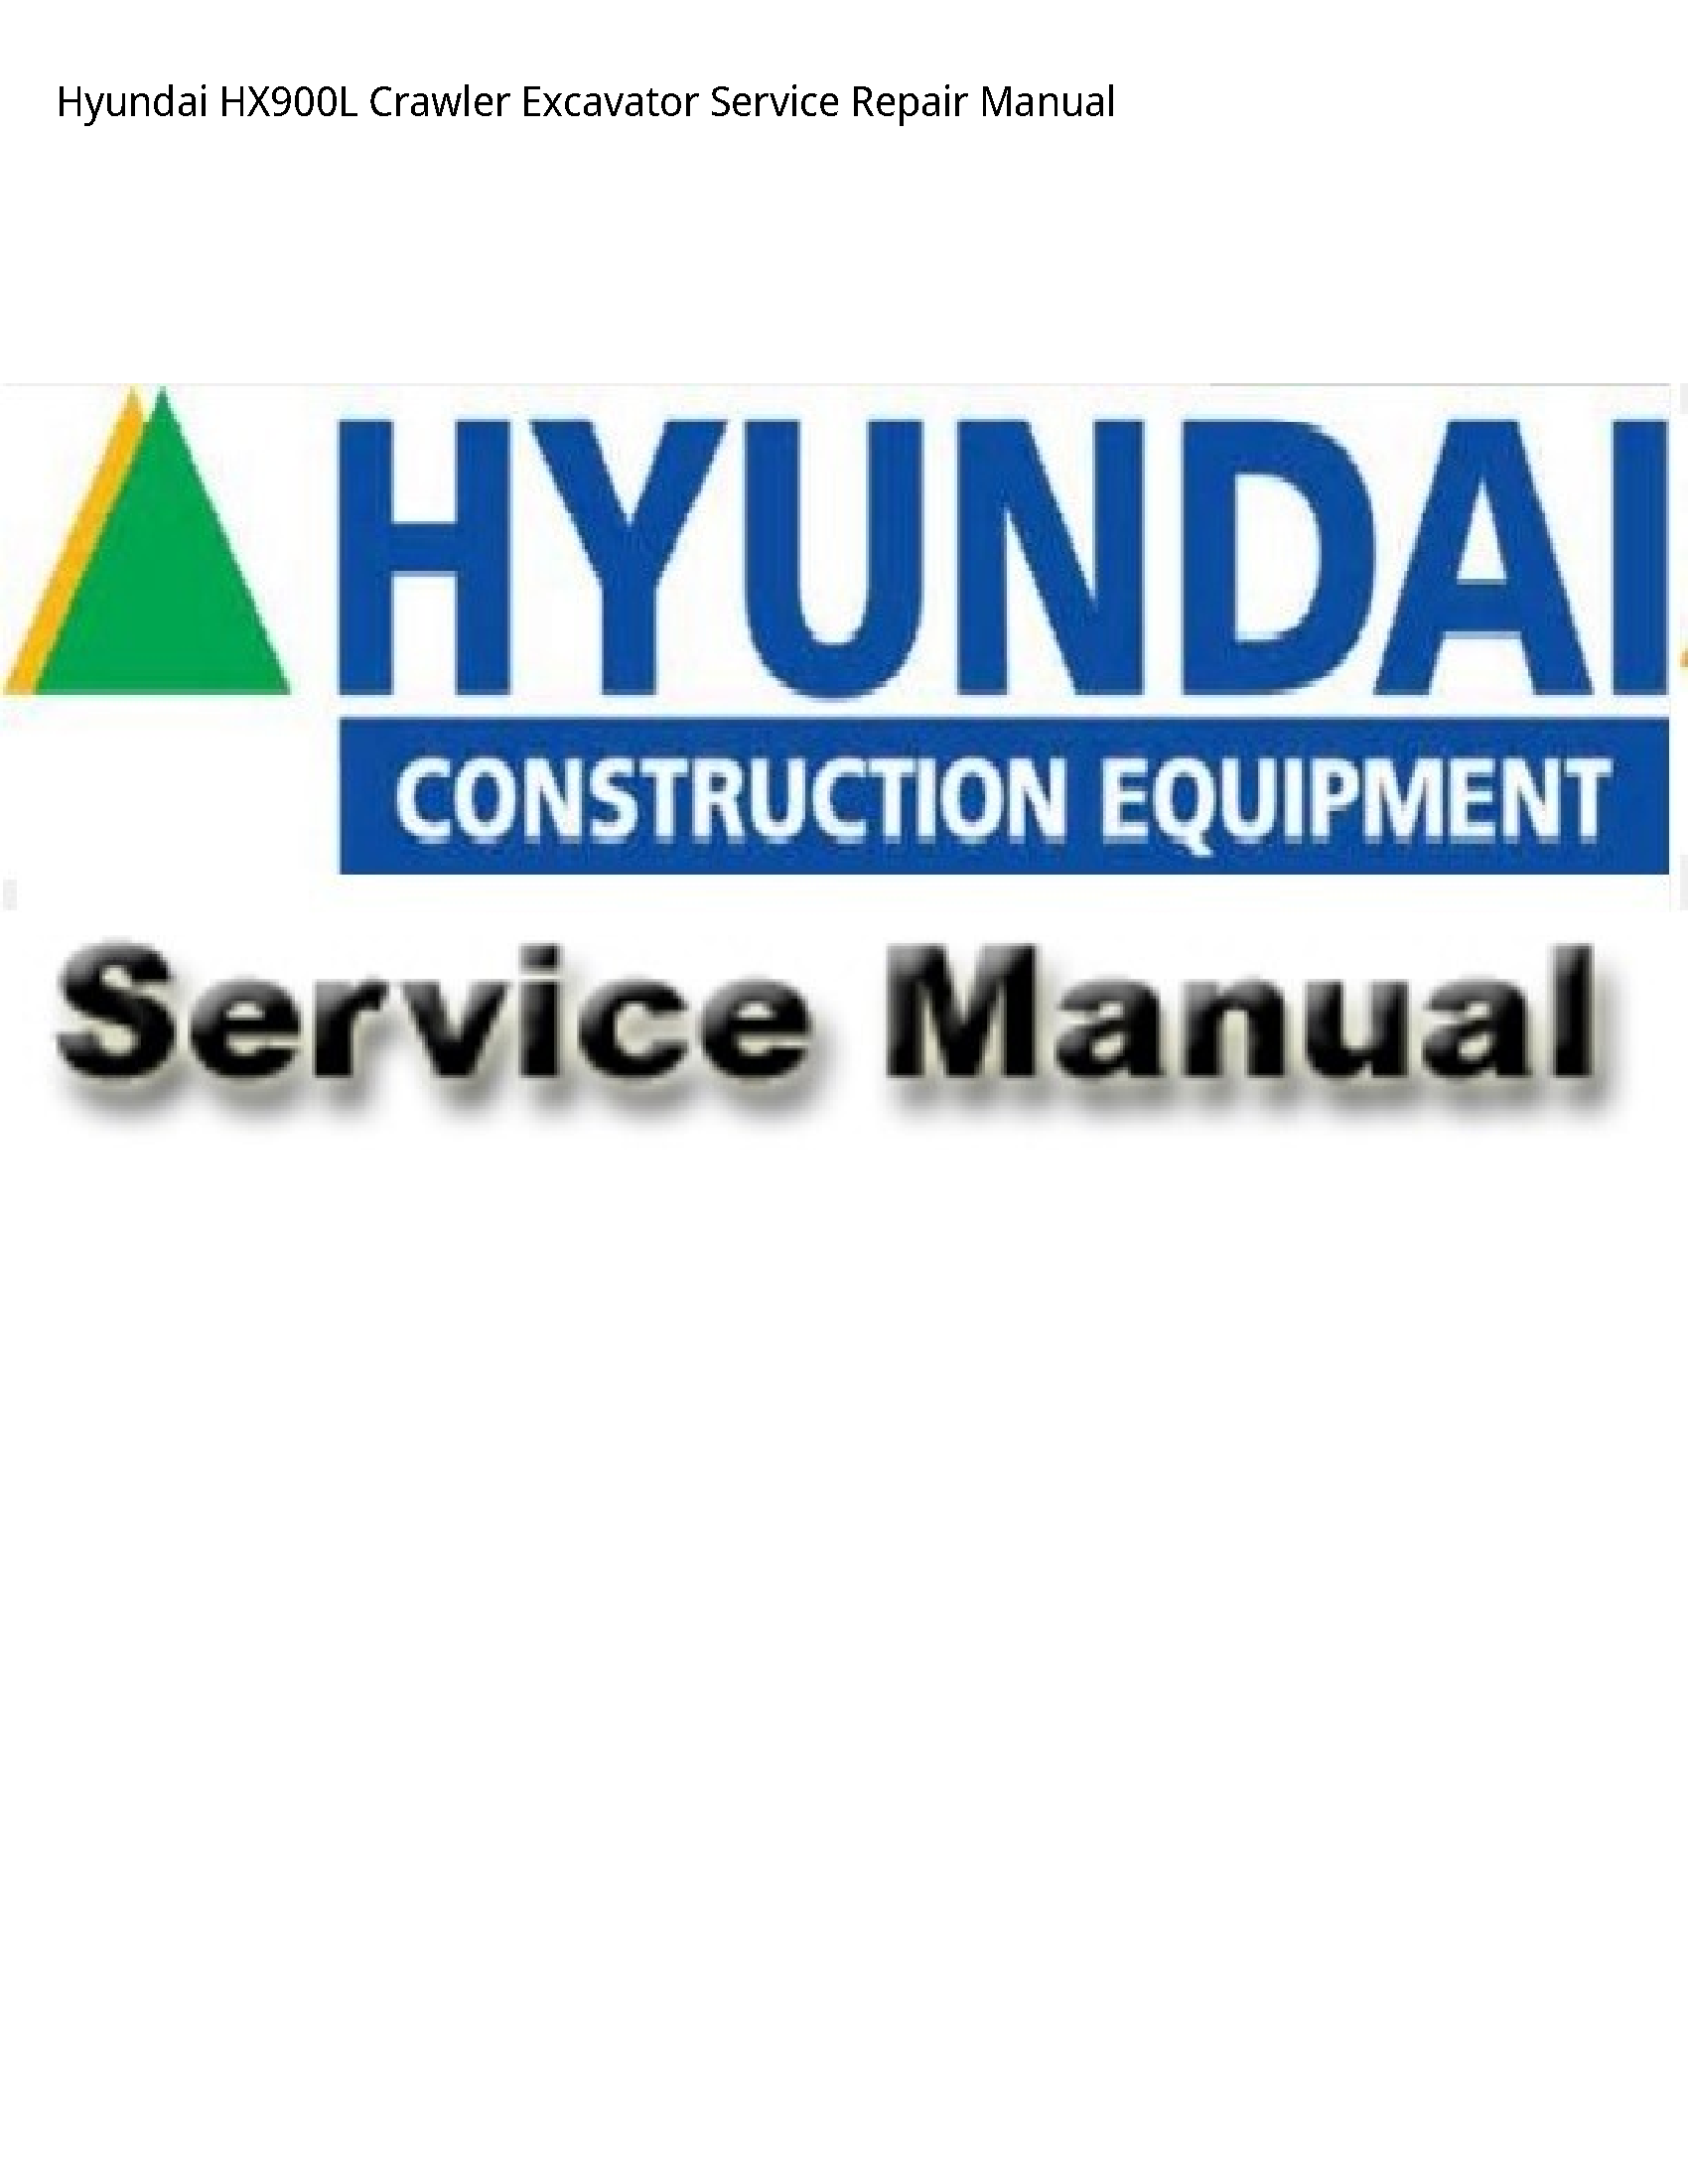 Hyundai HX900L Crawler Excavator manual